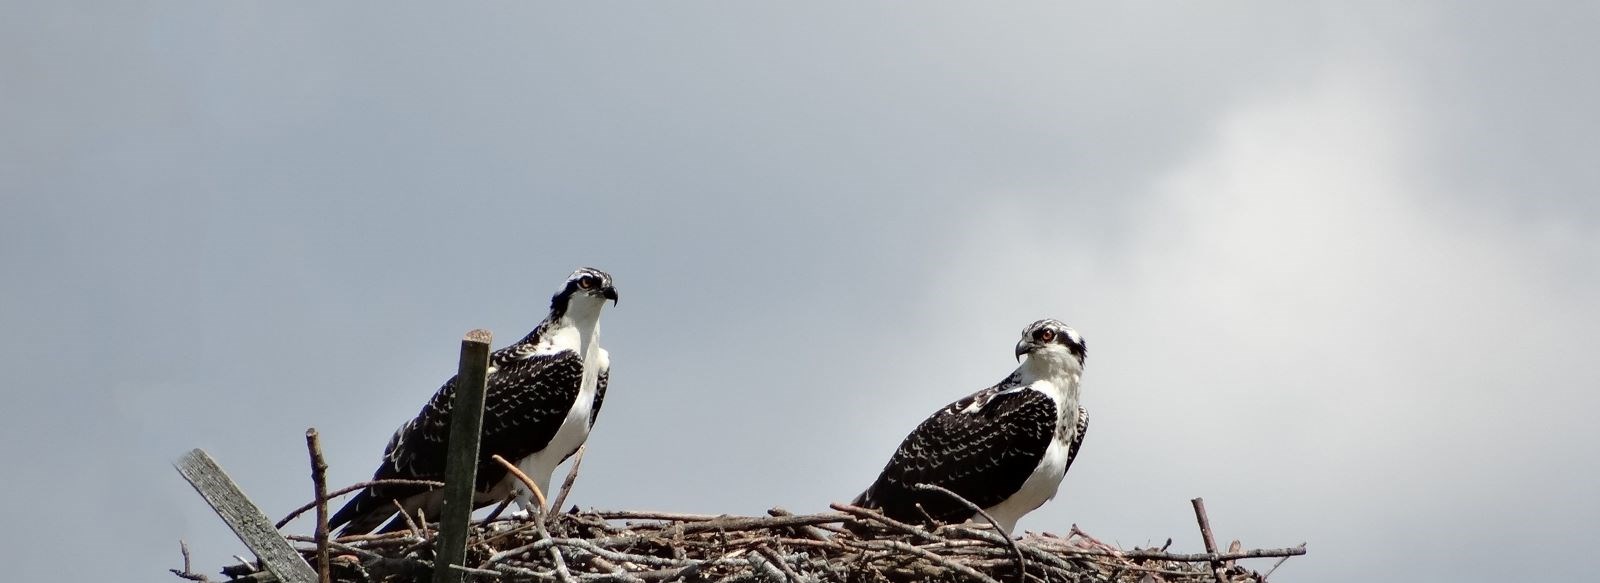 Osprey in nest